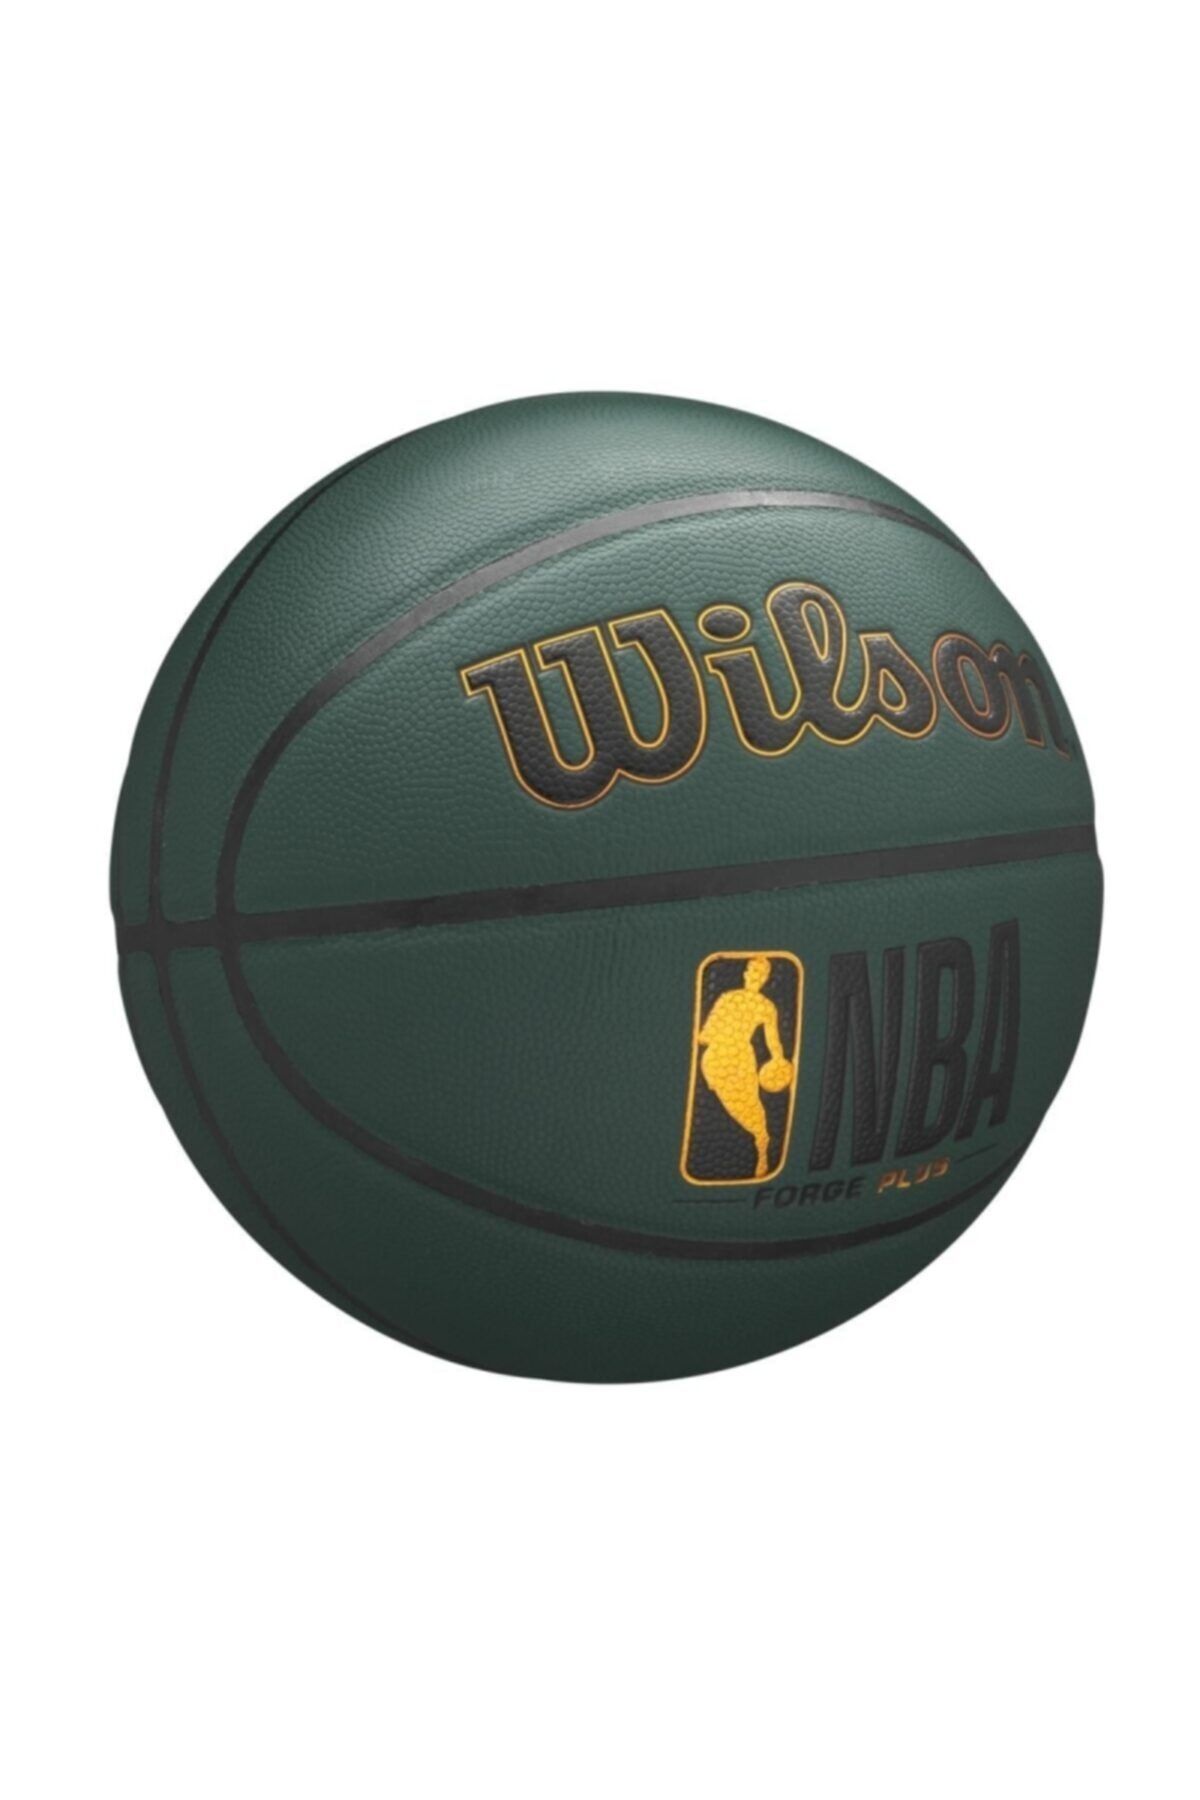 Wilson Nba Forge Plus Basketbol Topu Forest Green Size 7 Wtb8103xb07